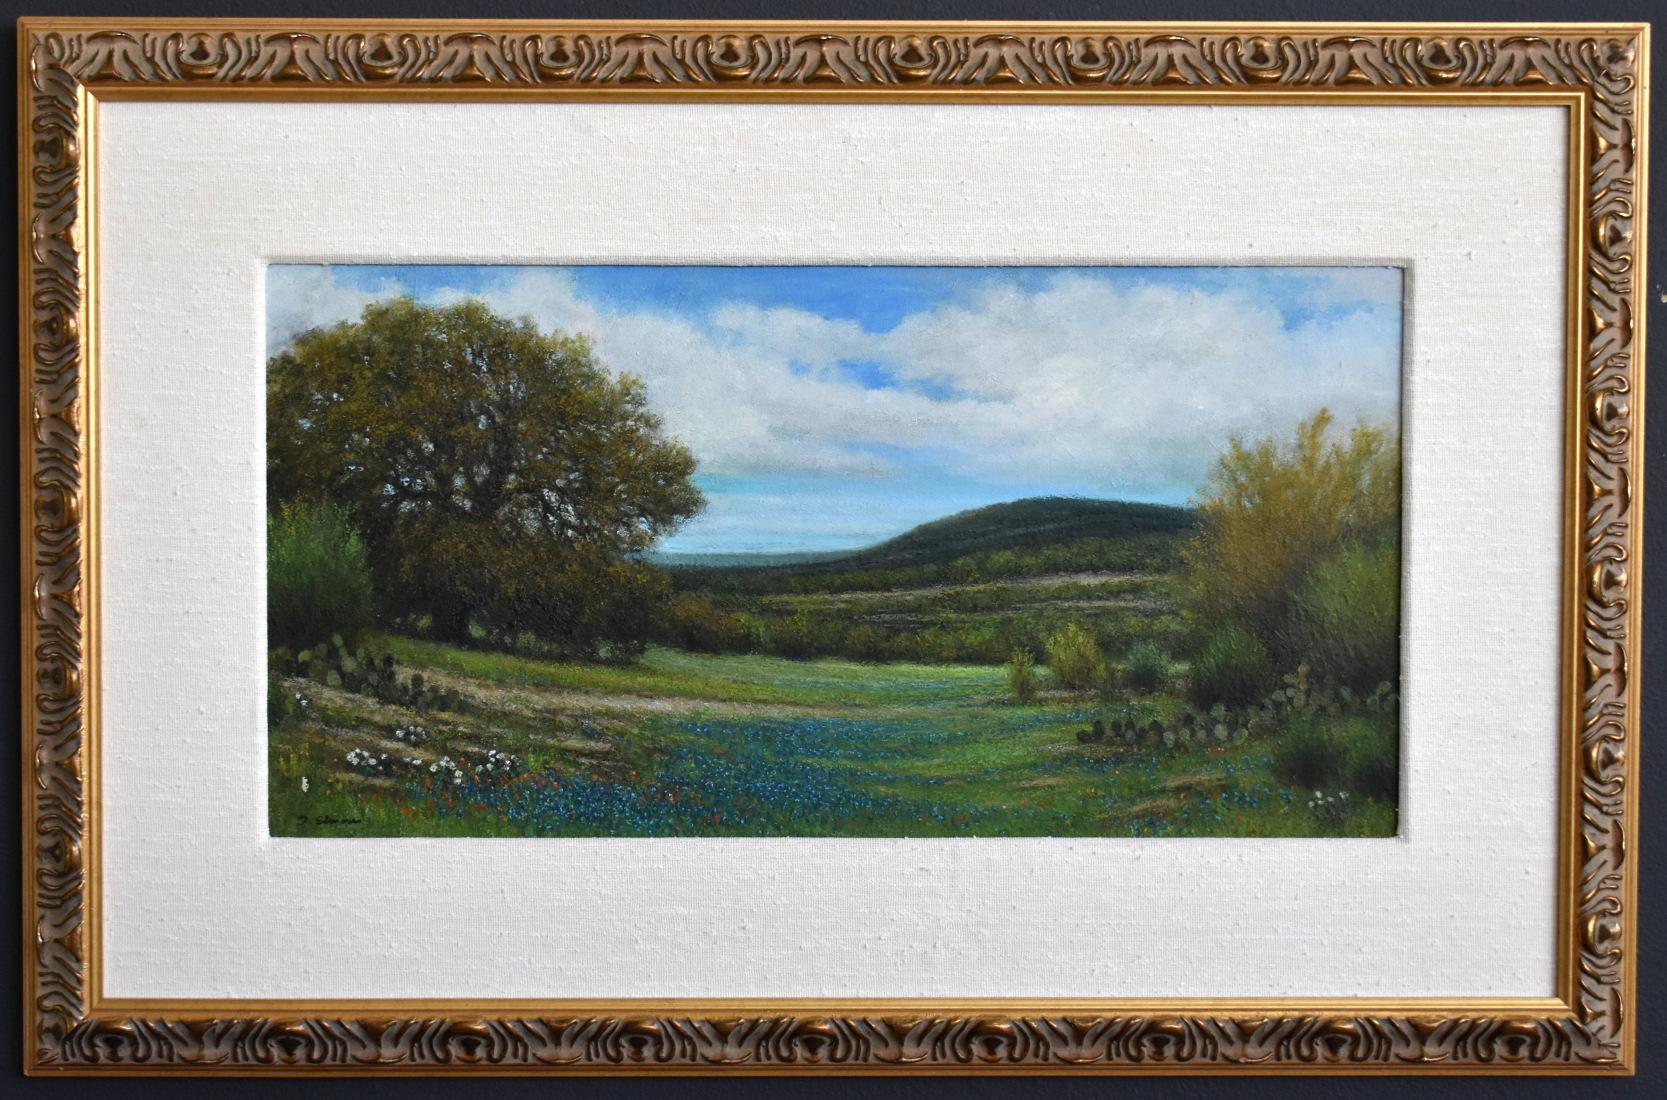 Don Elmore Landscape Painting - "LLANO BLUES" BLUEBONNET TEXAS HILL COUNTRY